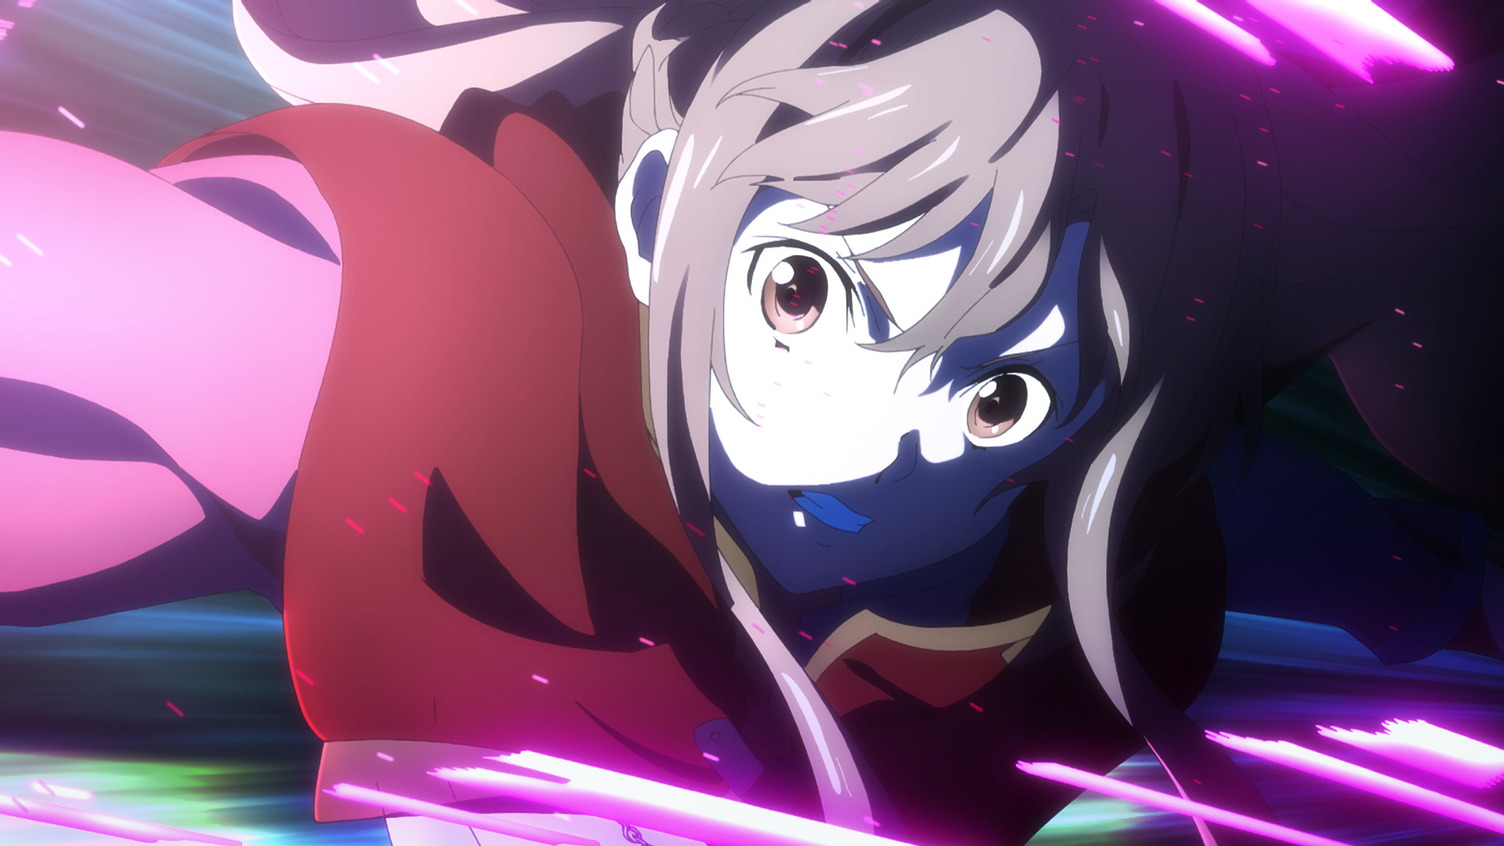 The Fight Continues in New Sword Art Online -Progressive- Scherzo of Deep Night Anime Film Trailer